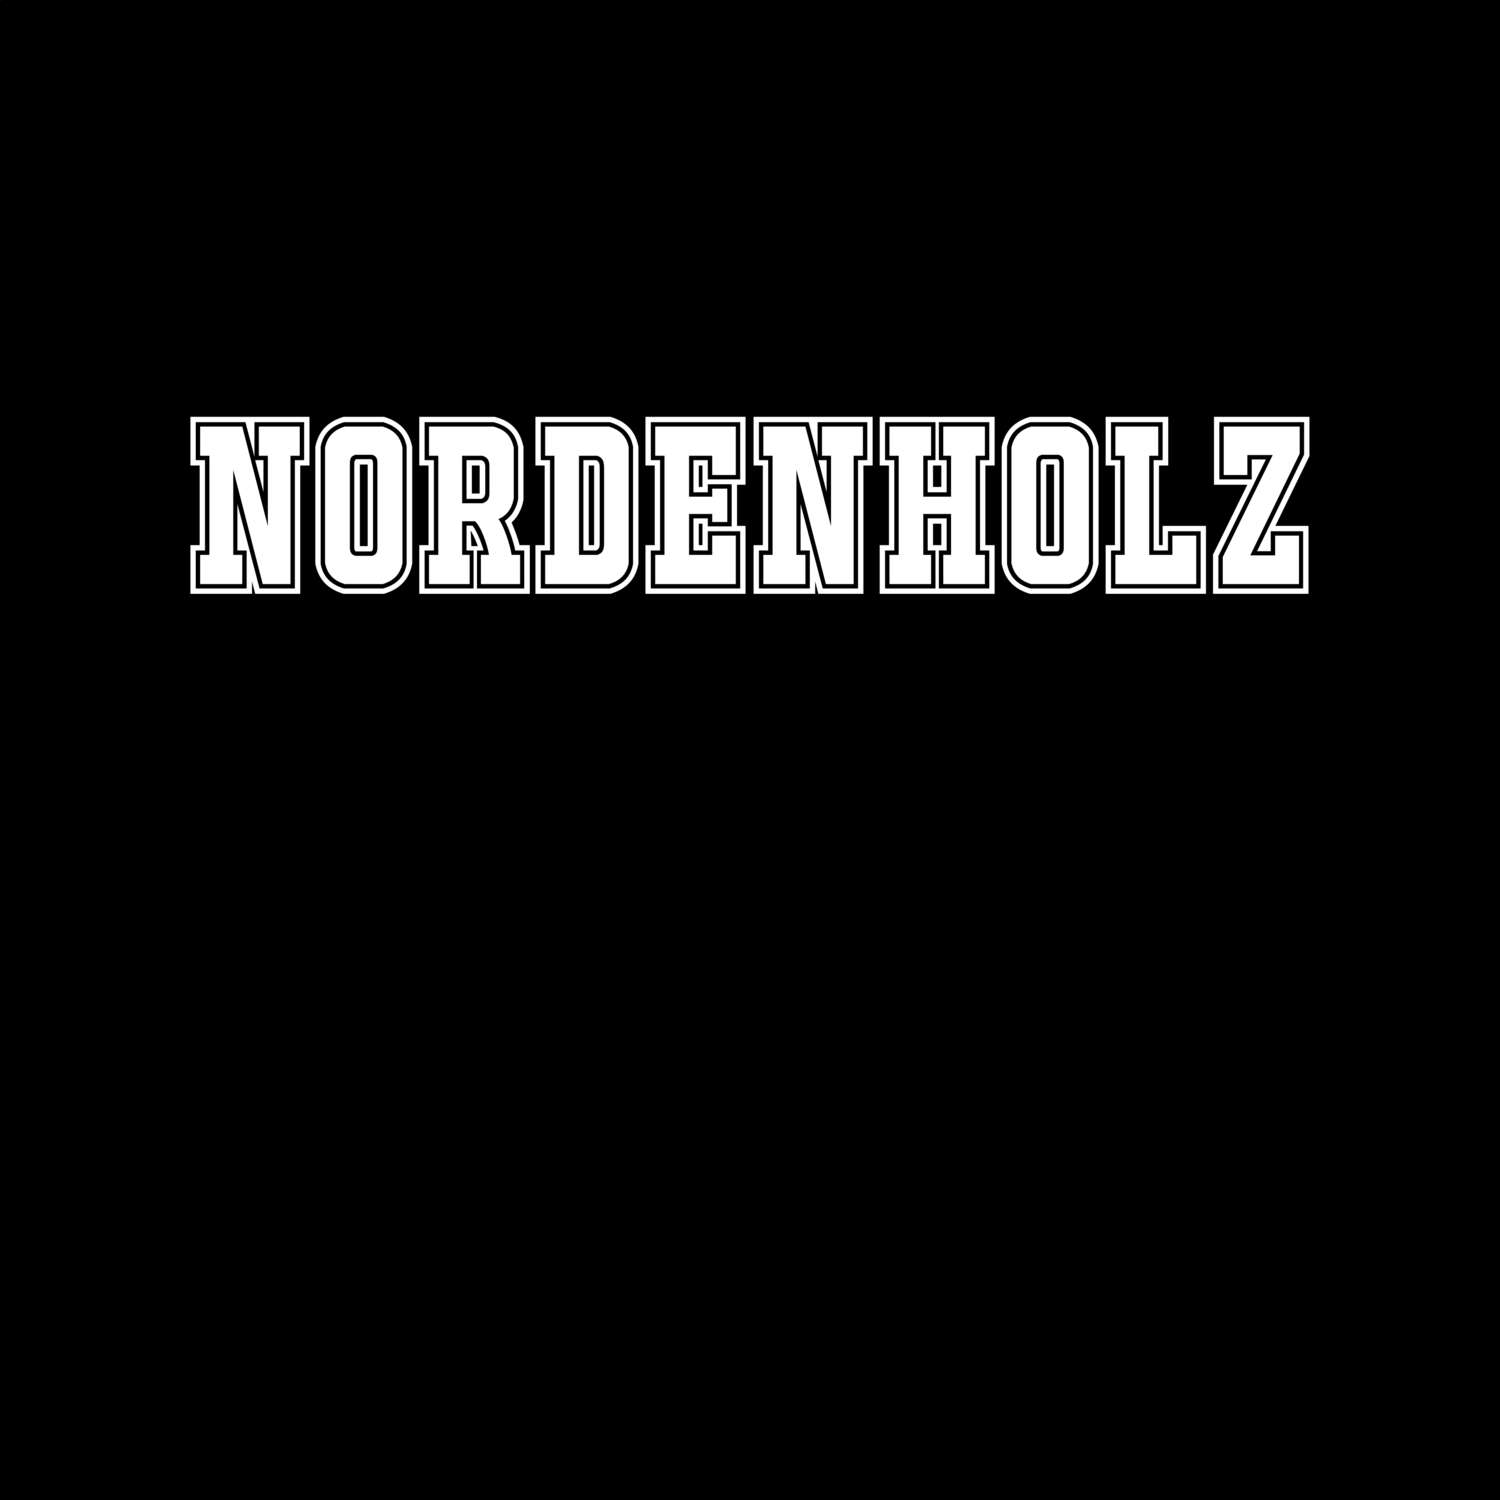 Nordenholz T-Shirt »Classic«